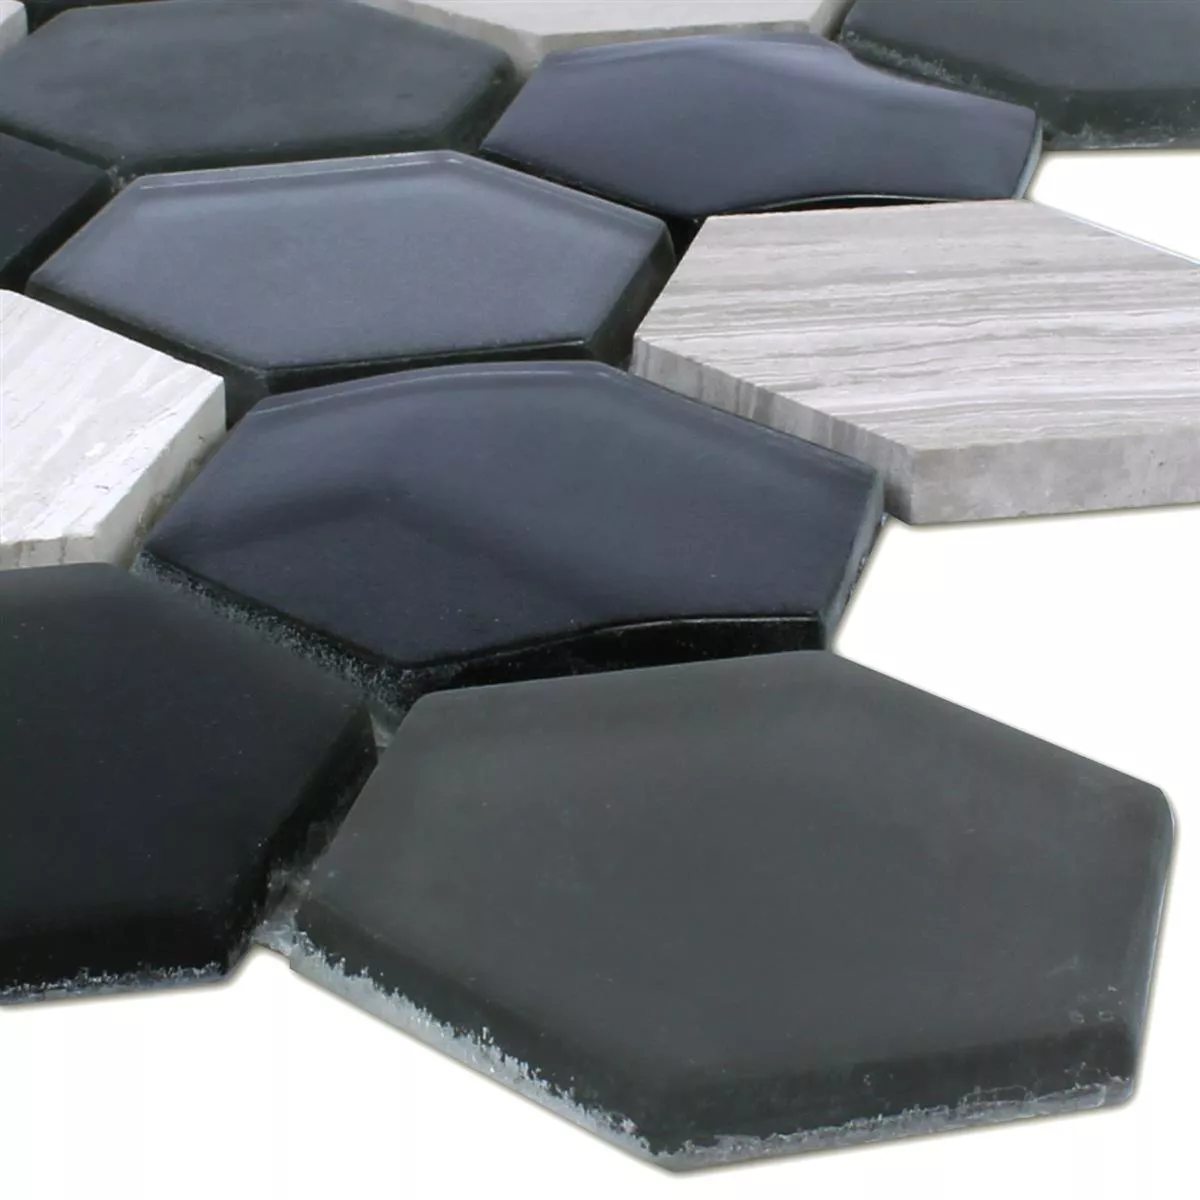 Sample Mosaic Tiles Hexagon Glass Natural Stone Black Grey 3D